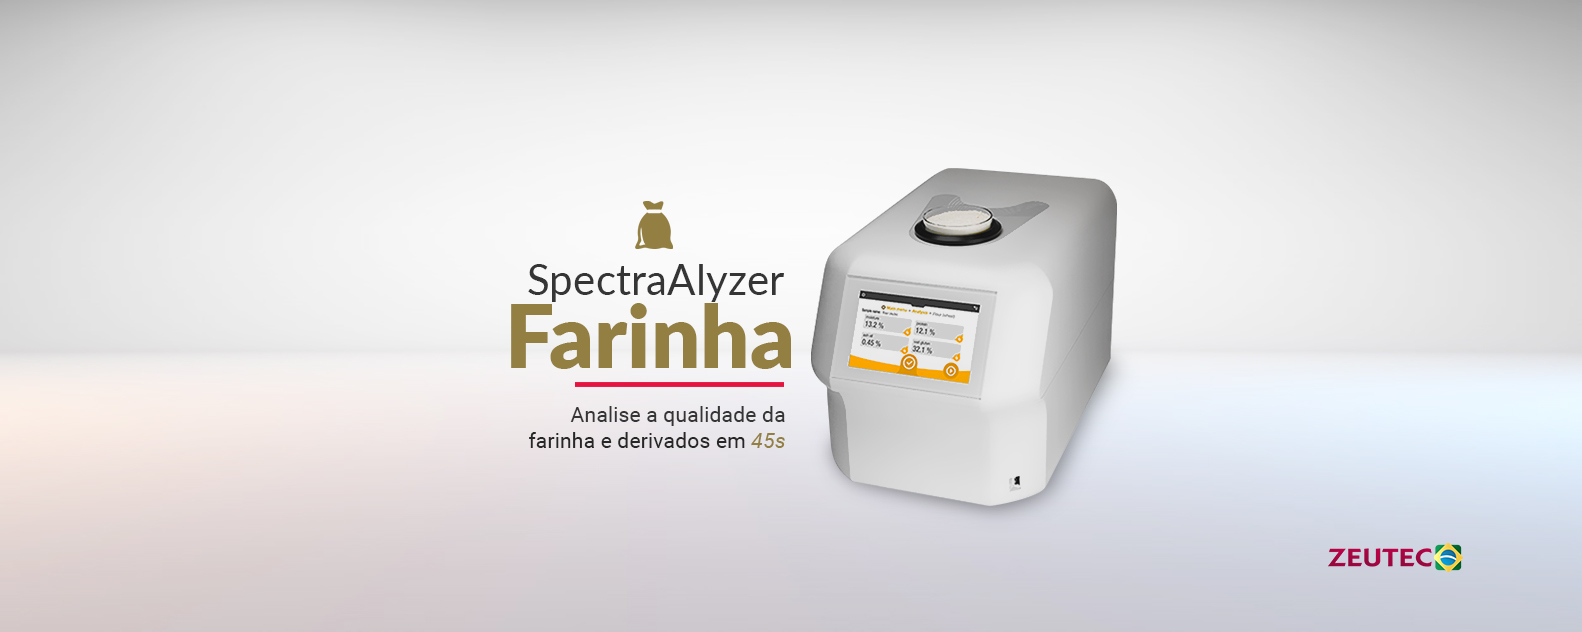 SpectraAlyzer Farinha NIR